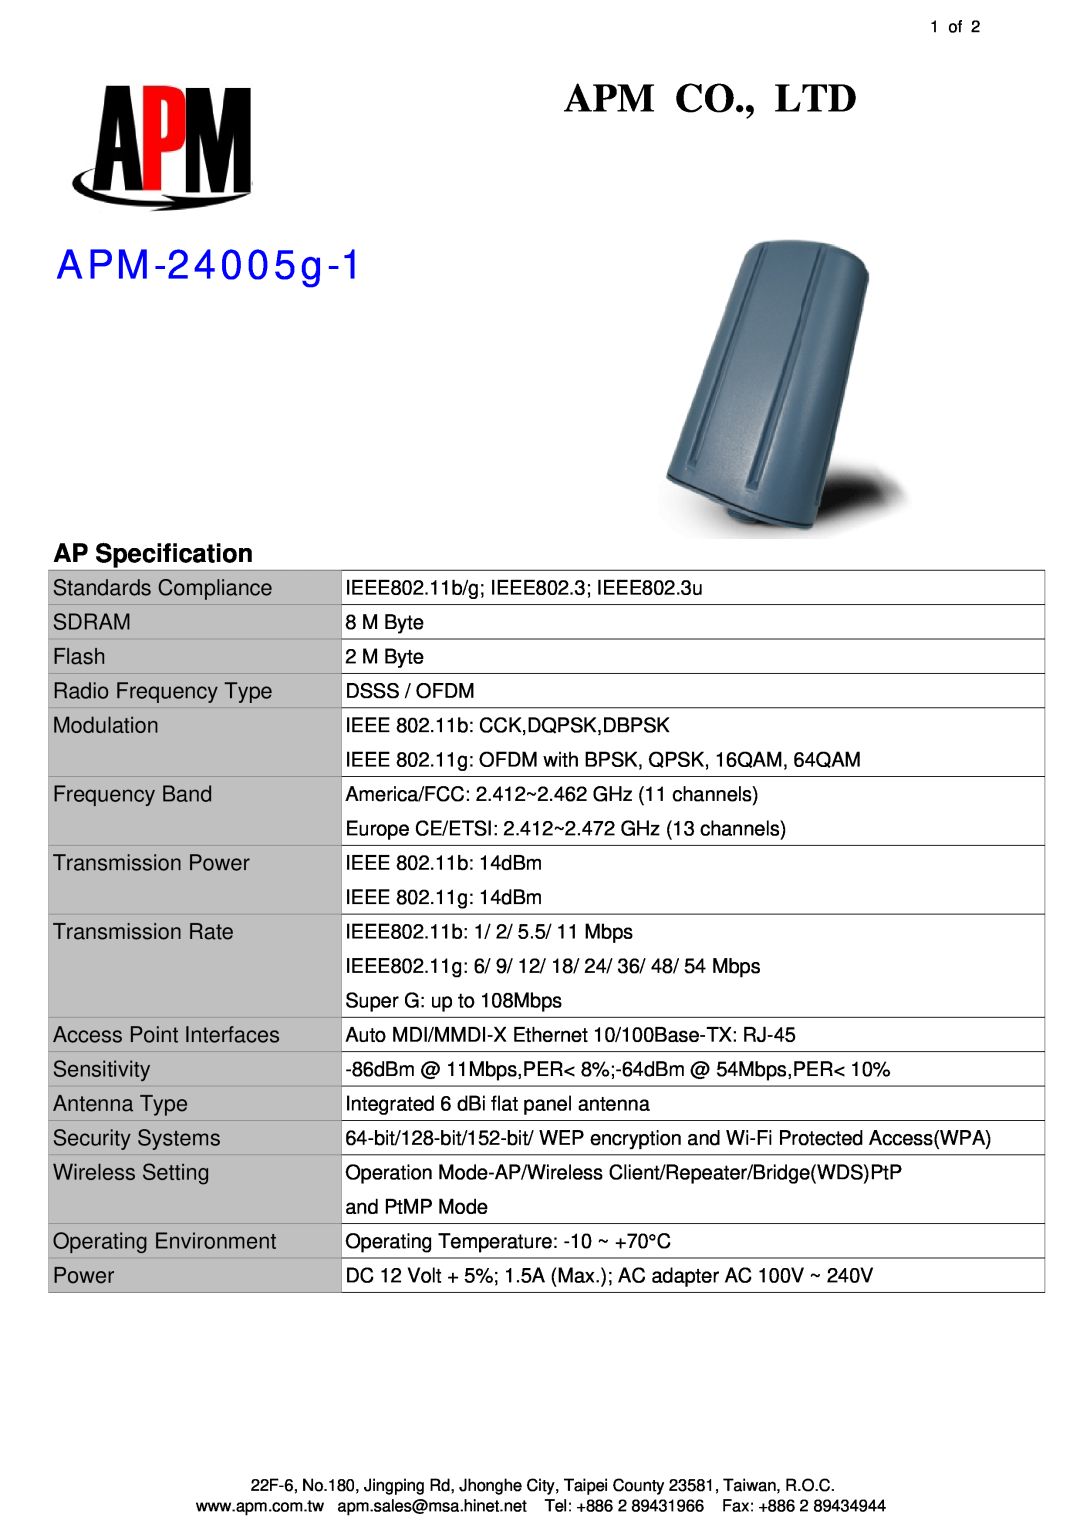 APM 24005G-1 manual AP Specification, APM-24005g-1 